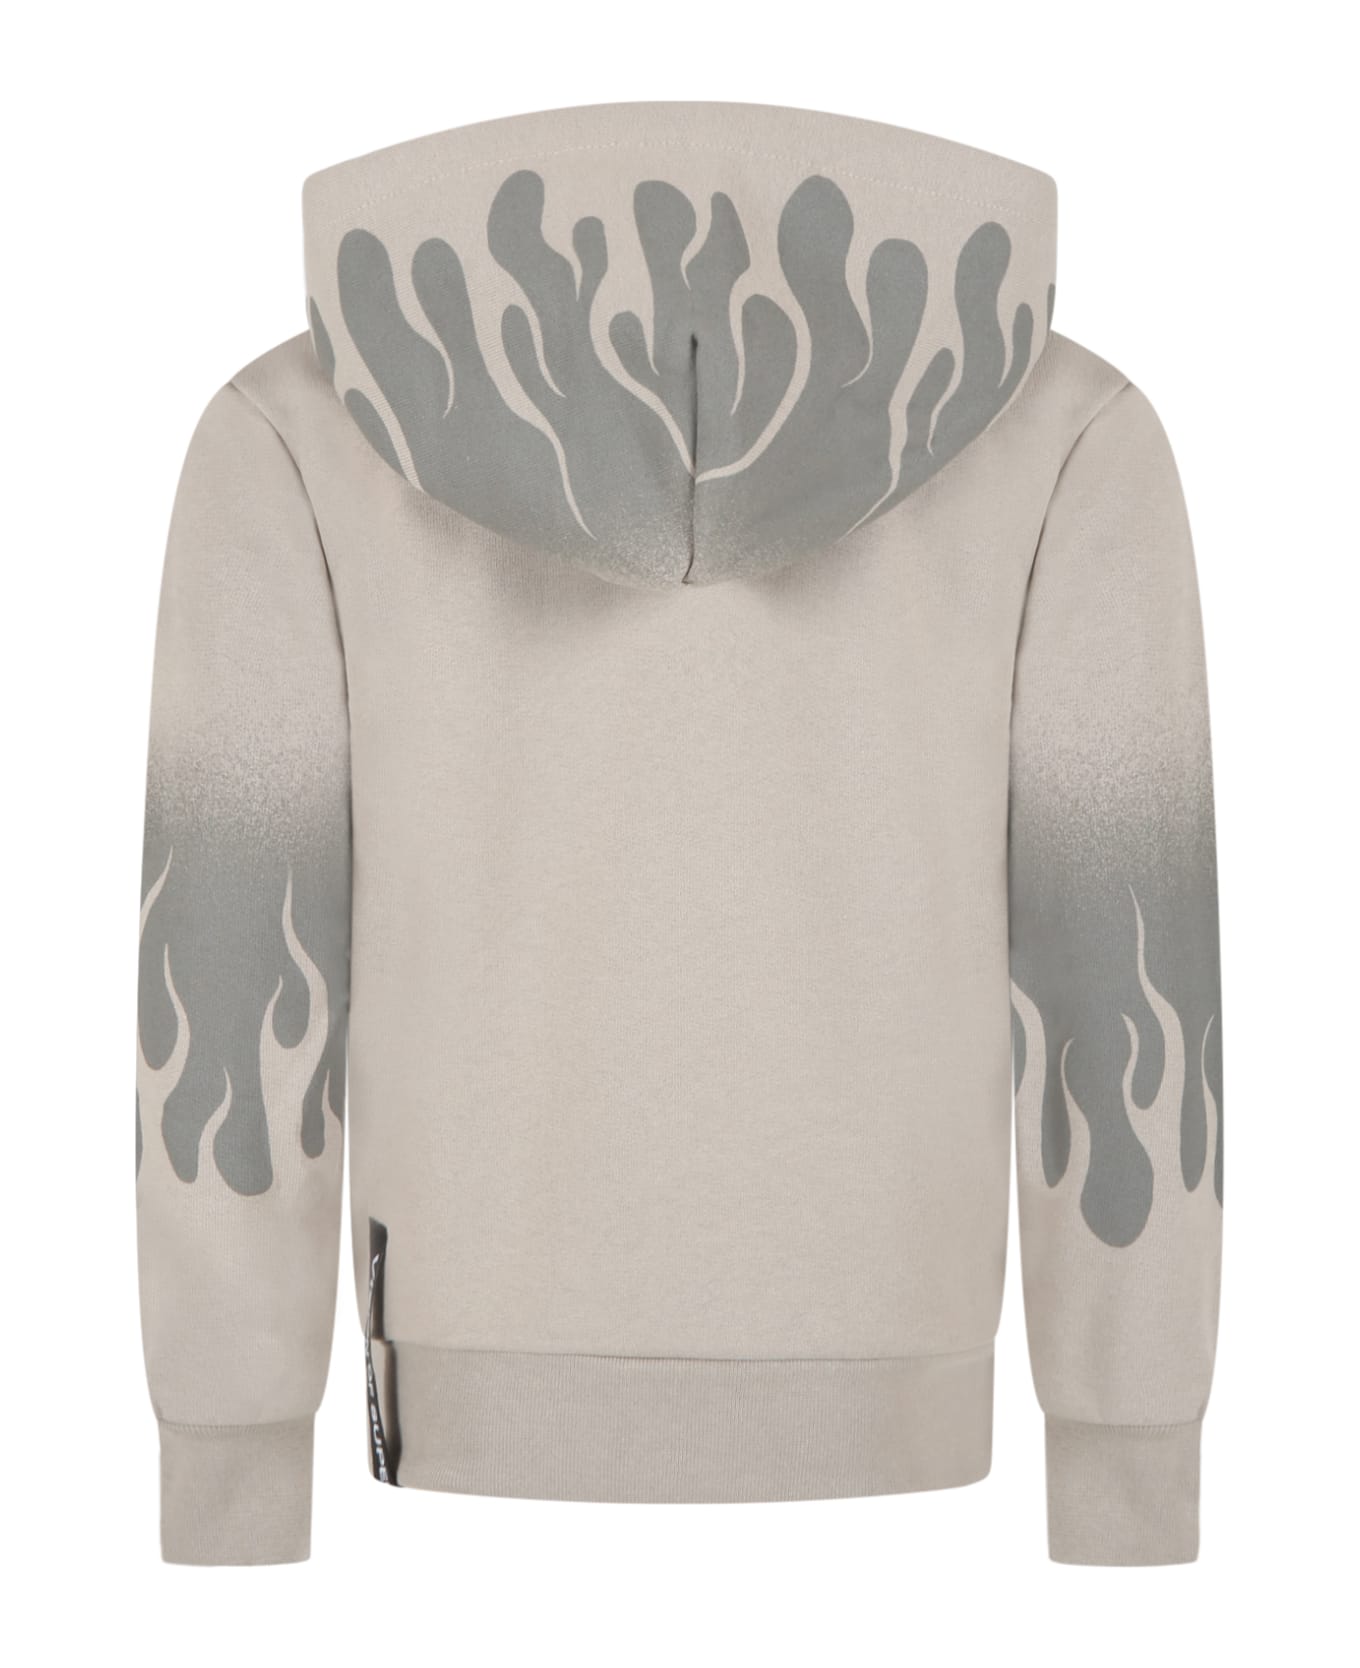 Vision of Super Beige Sweatshirt For Boy With Flames - Beige